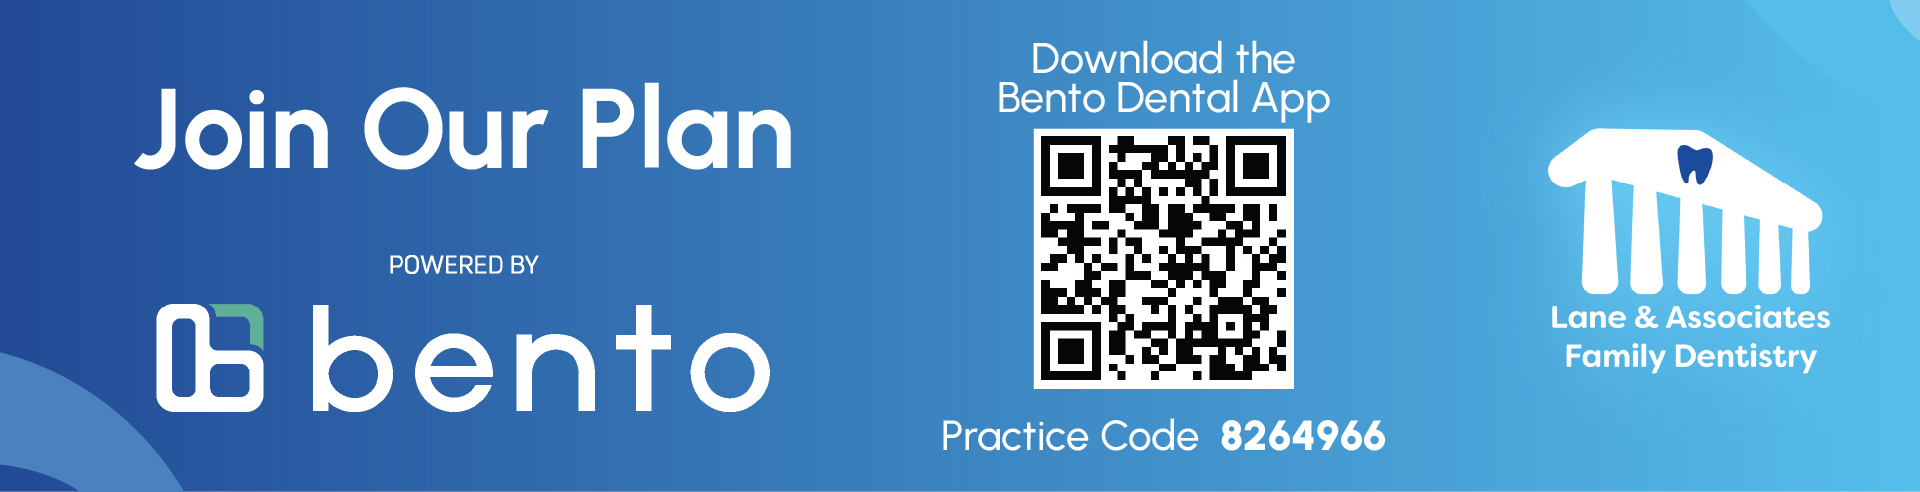 Download the Bento Dental App today